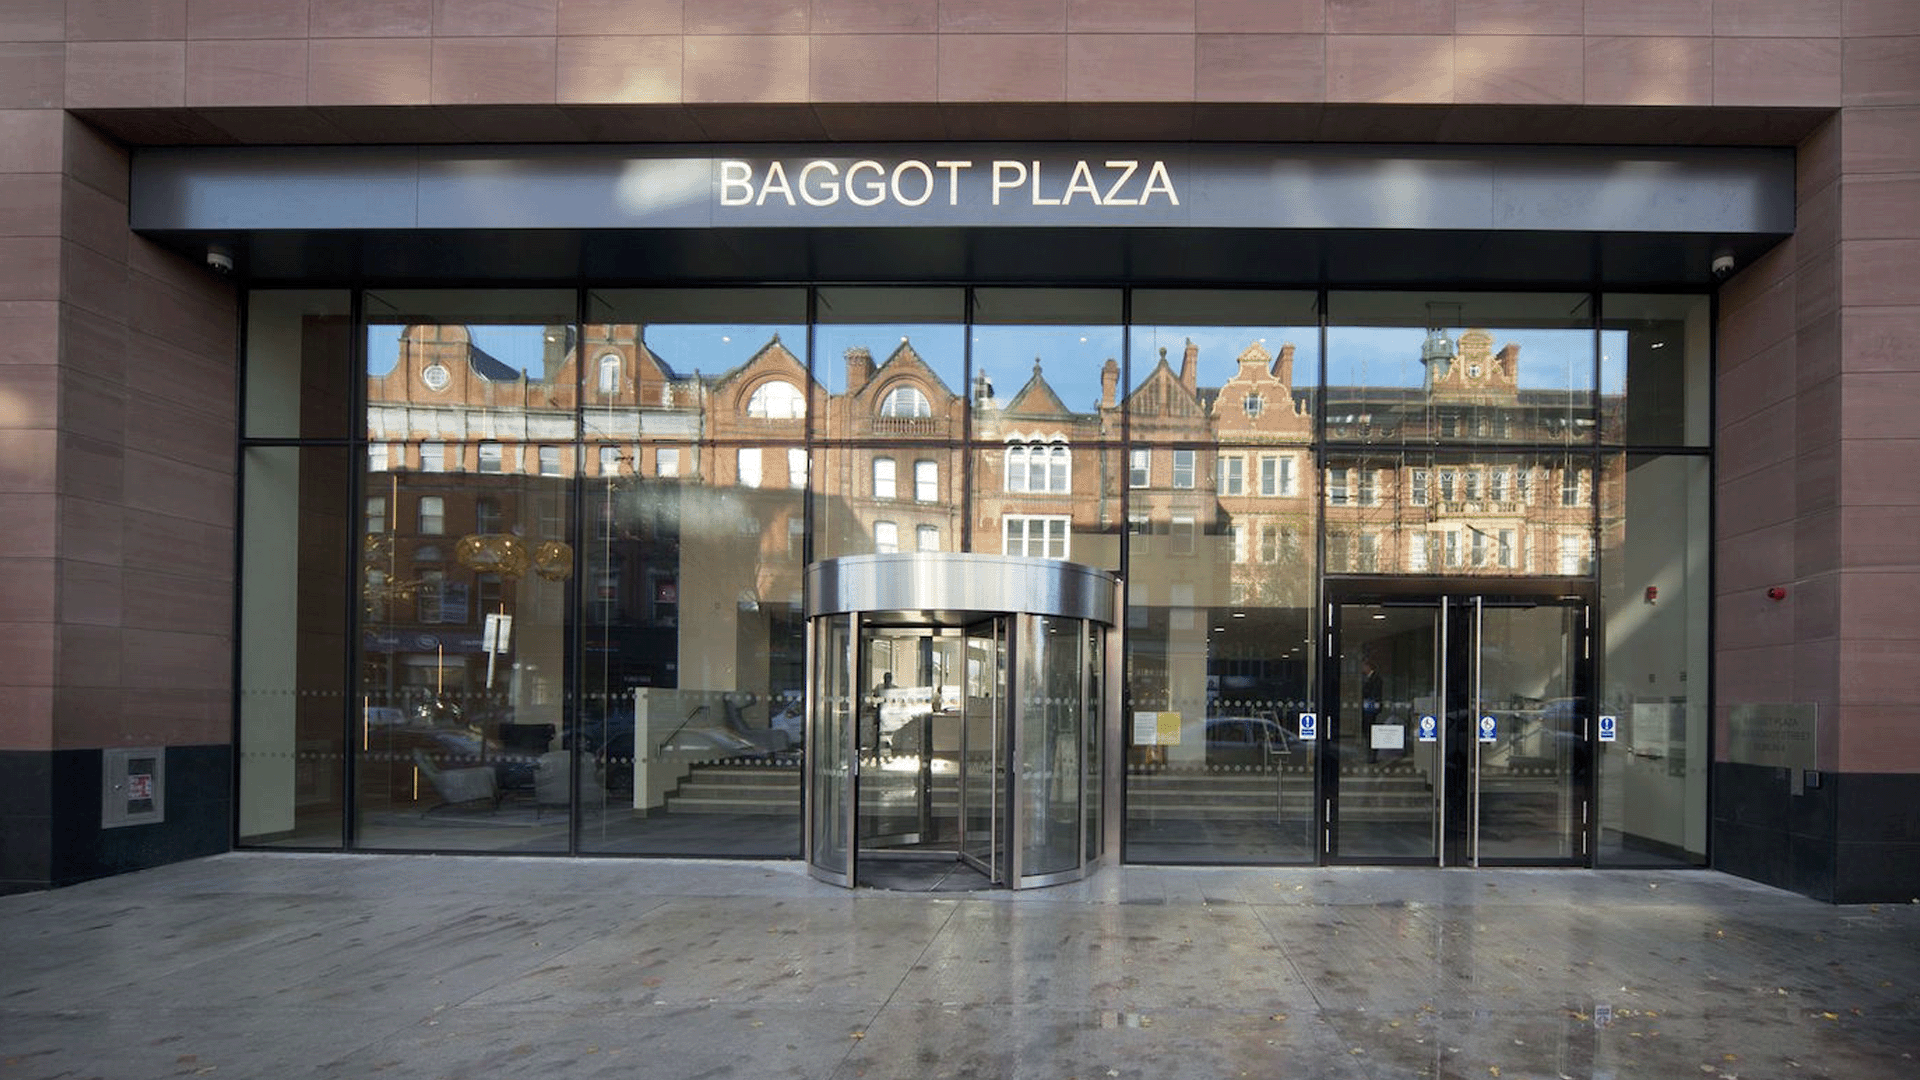 Baggot Plaza